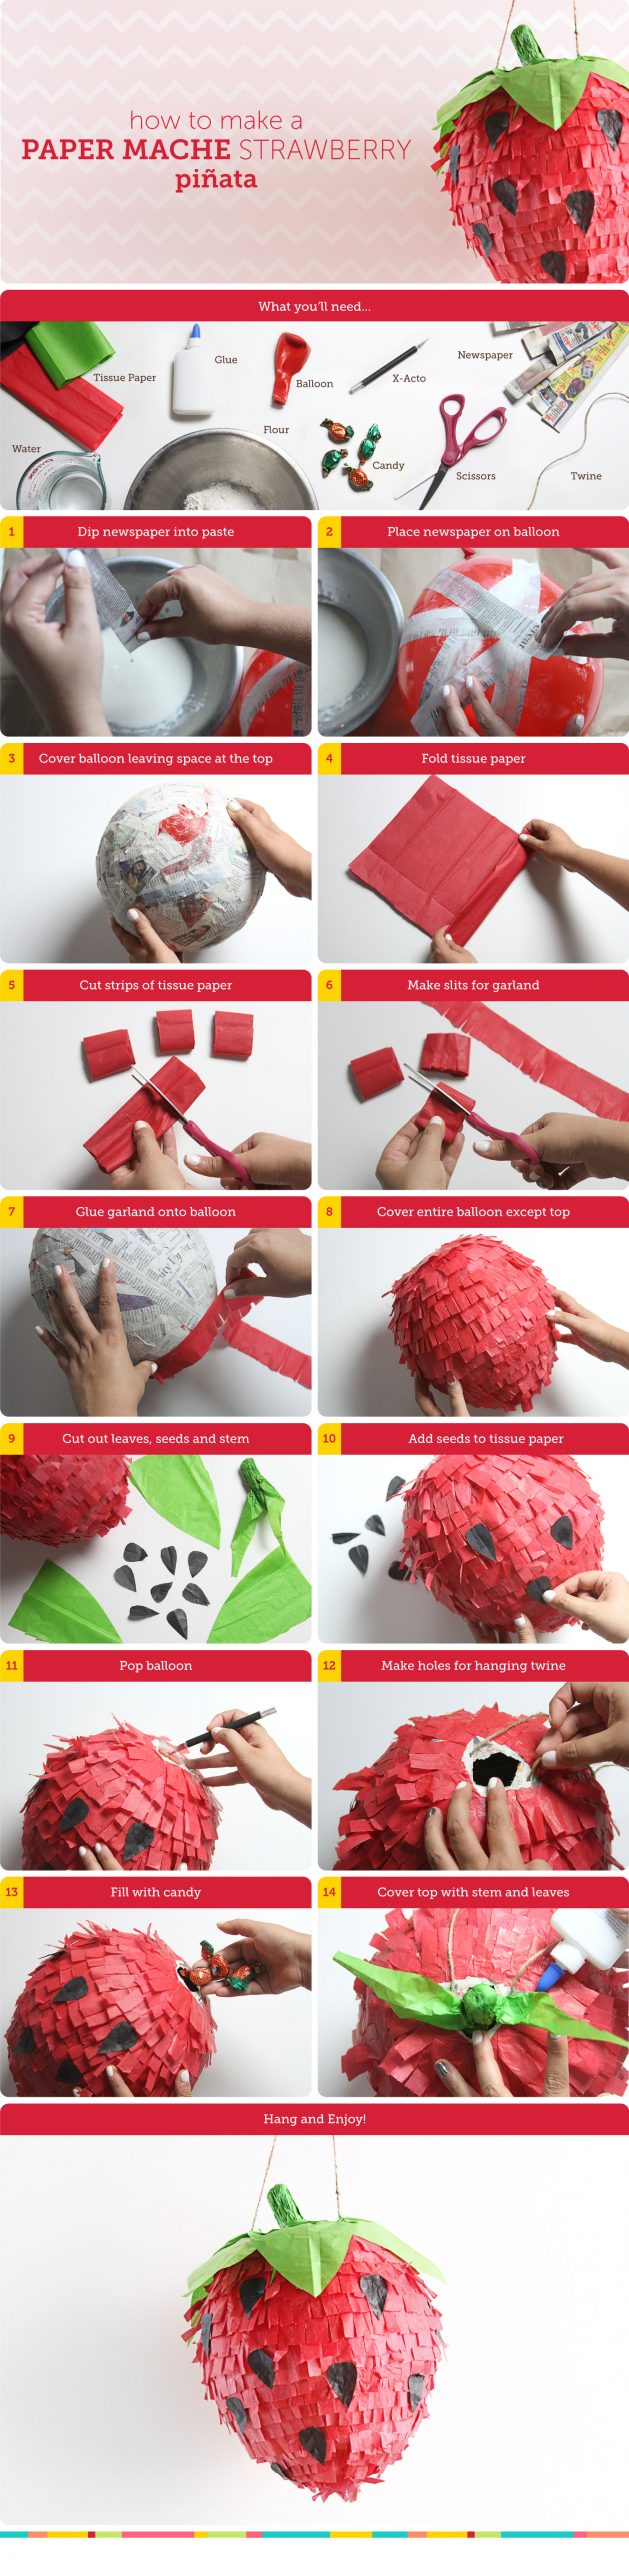 How to Make A Piñata: 3 Easy Methods